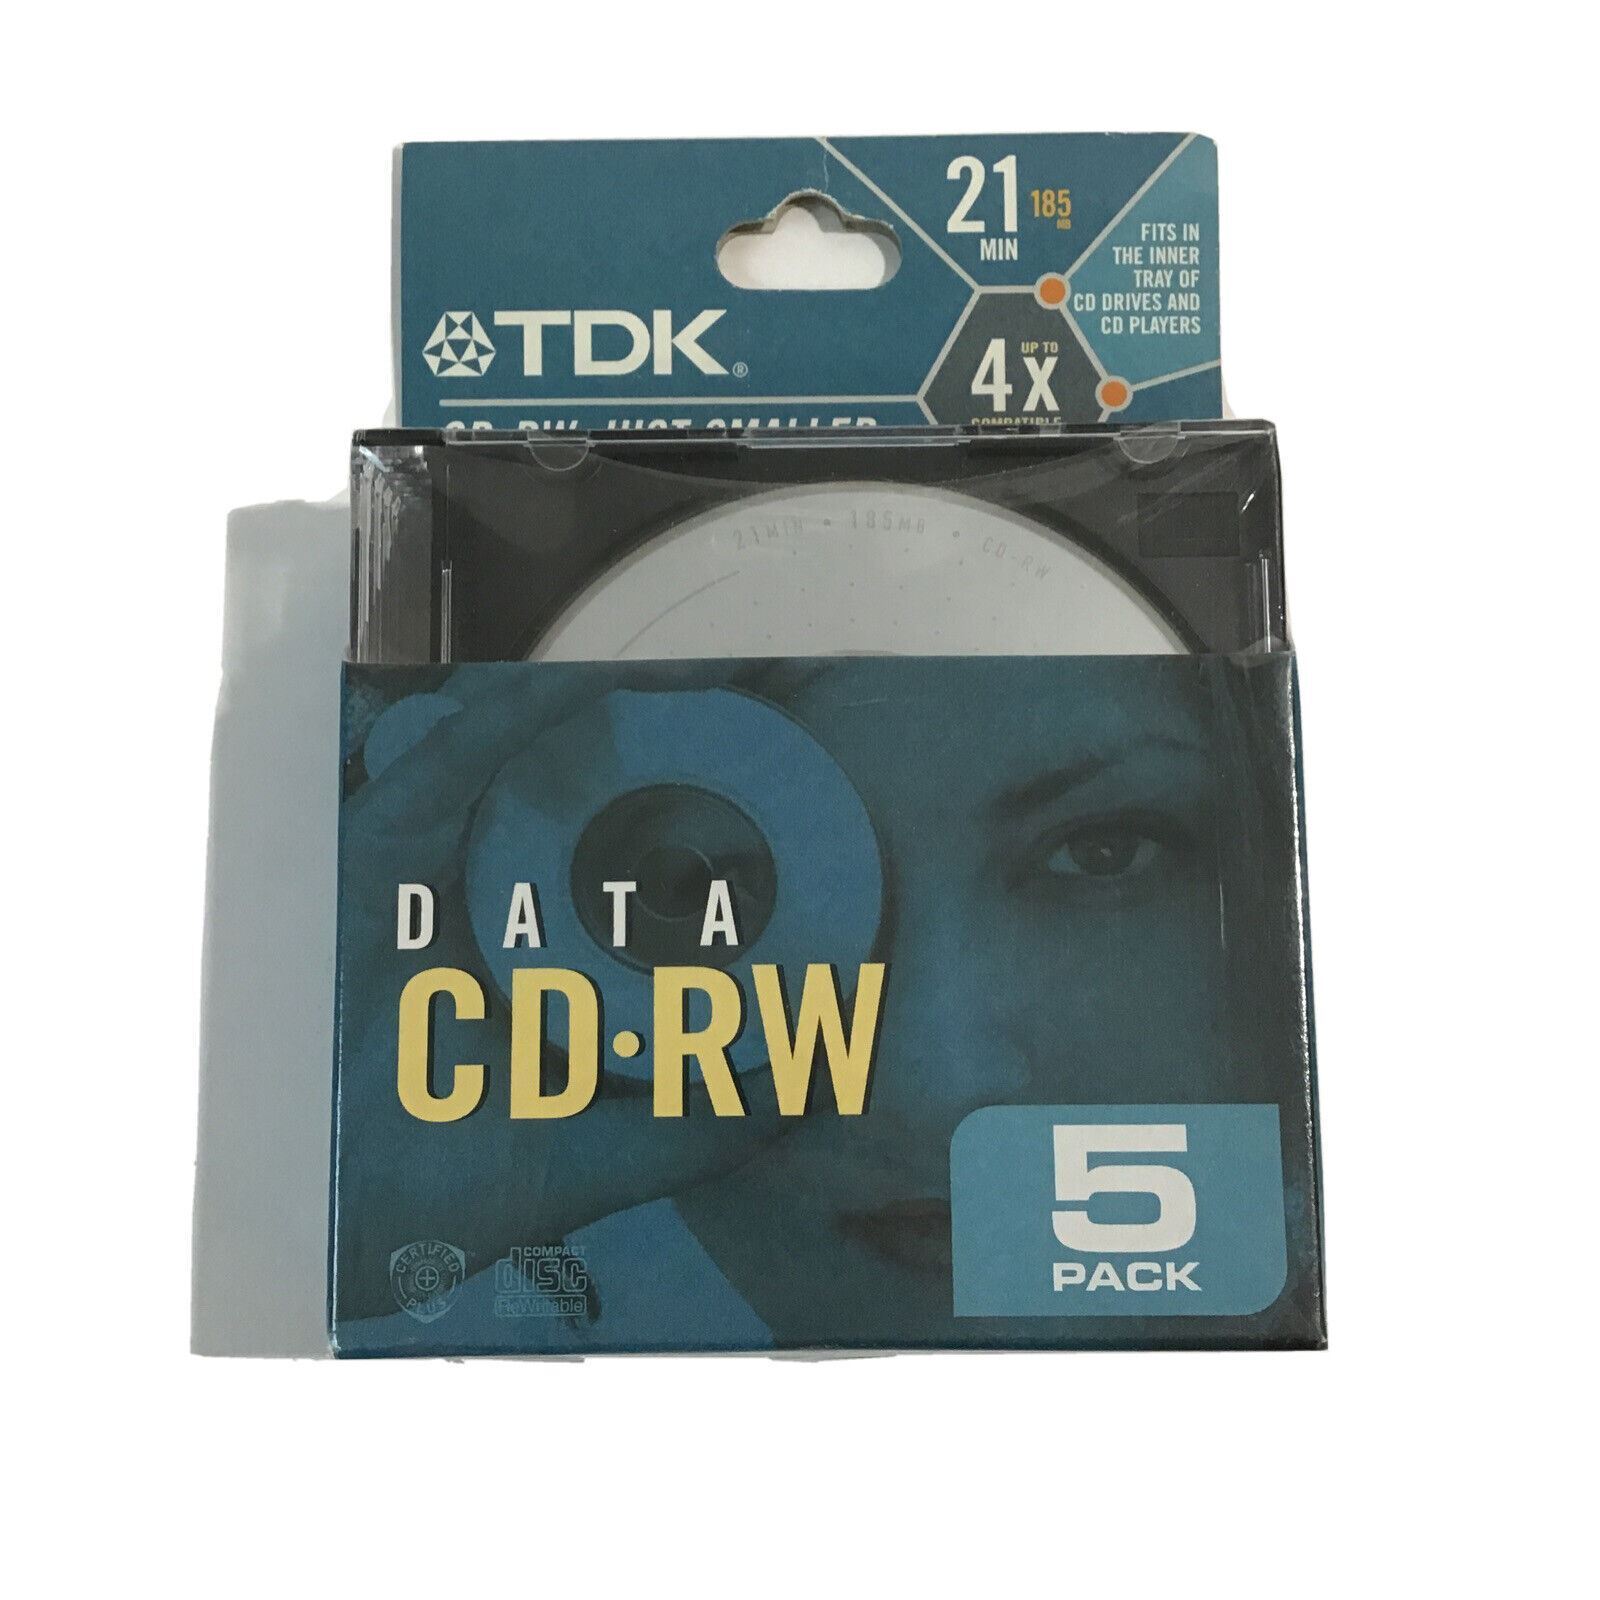 TDK DATA CD-RW Recordable Mini Discs - 21min 185mb 5 PACK Sealed